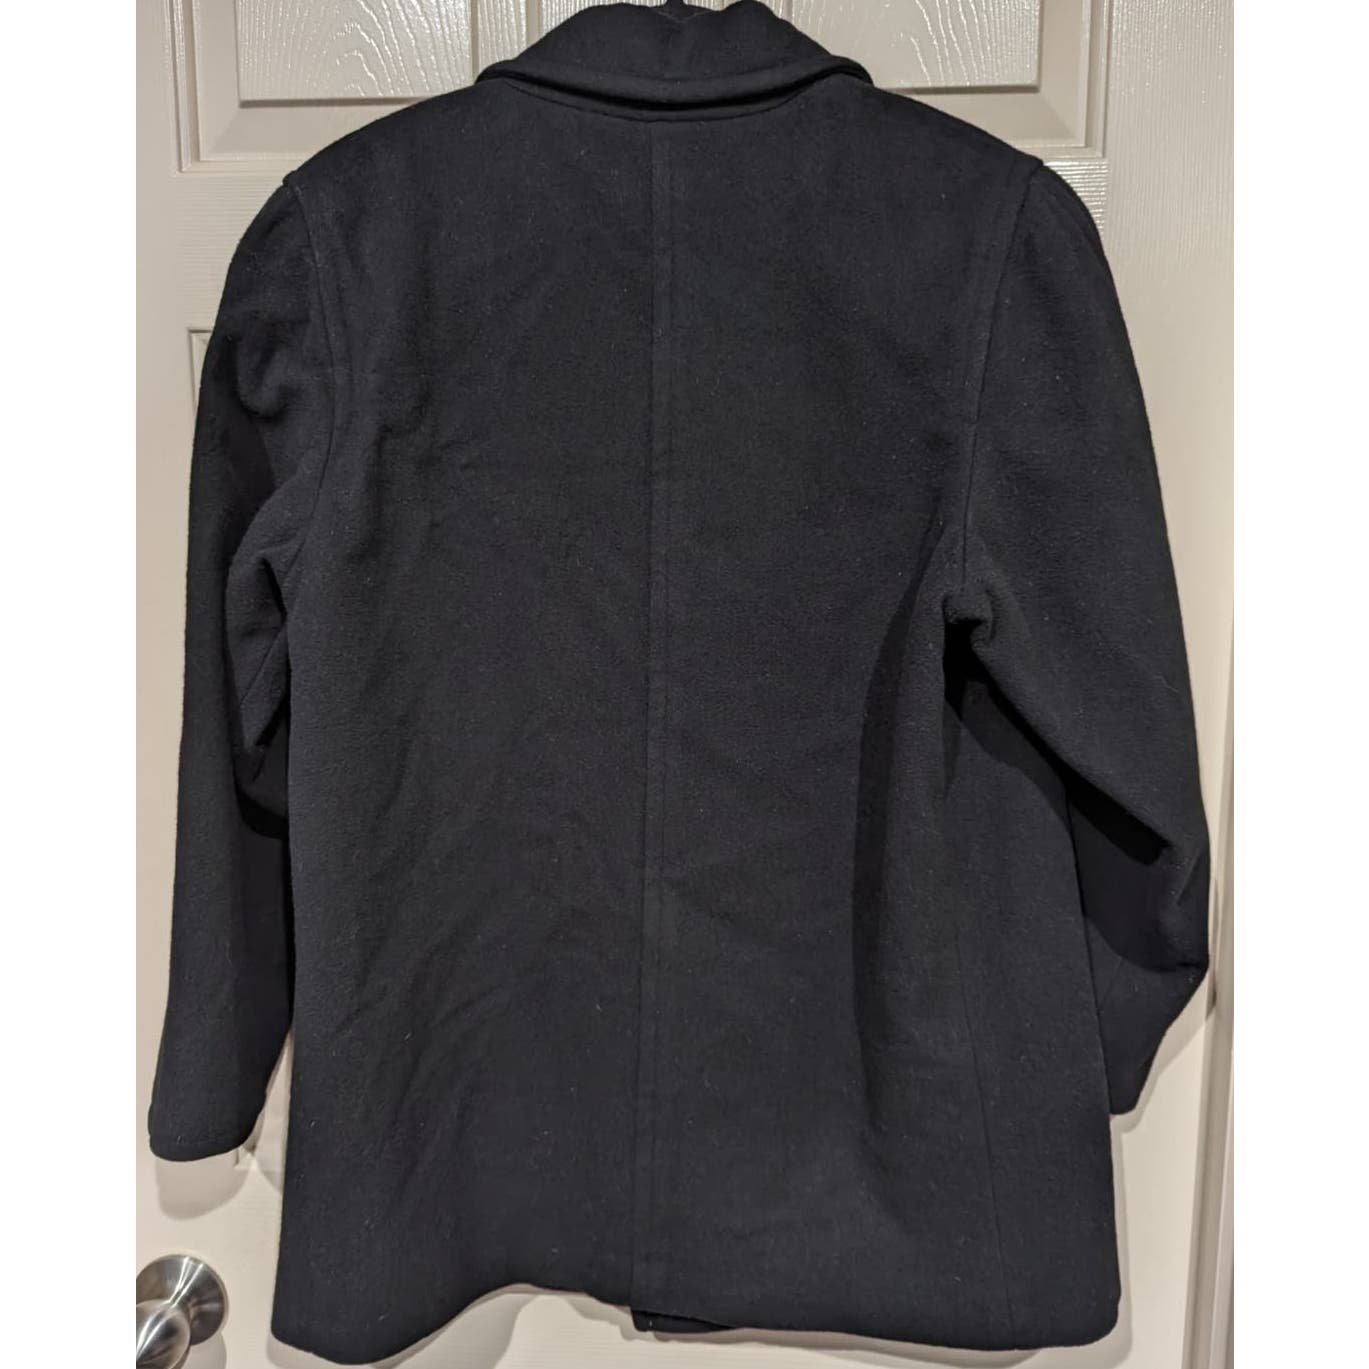 Custom Preston & York for Dillard´s Women´s Black 100% Wool Black Pea Coat size 14 IJkGTPM0e outlet online shop